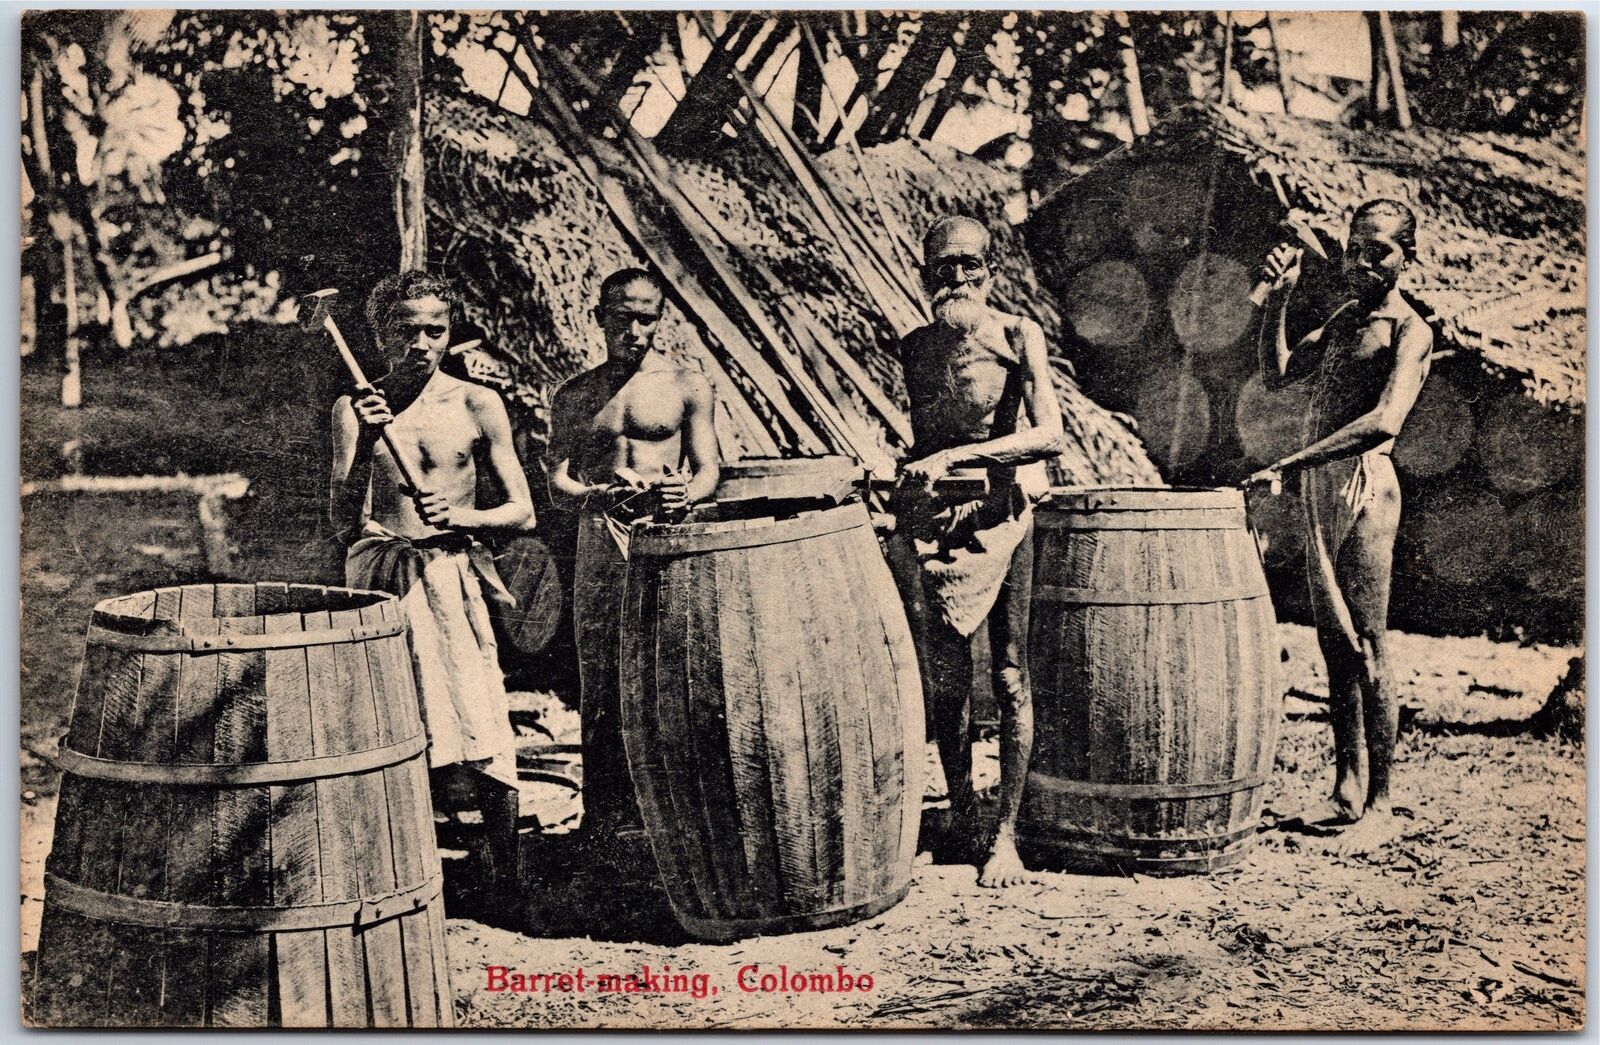 VINTAGE POSTCARD MAKING BARRELS IN COLOMBO CEYLON (SRI LANKA) c. 1910 (SCARCE)